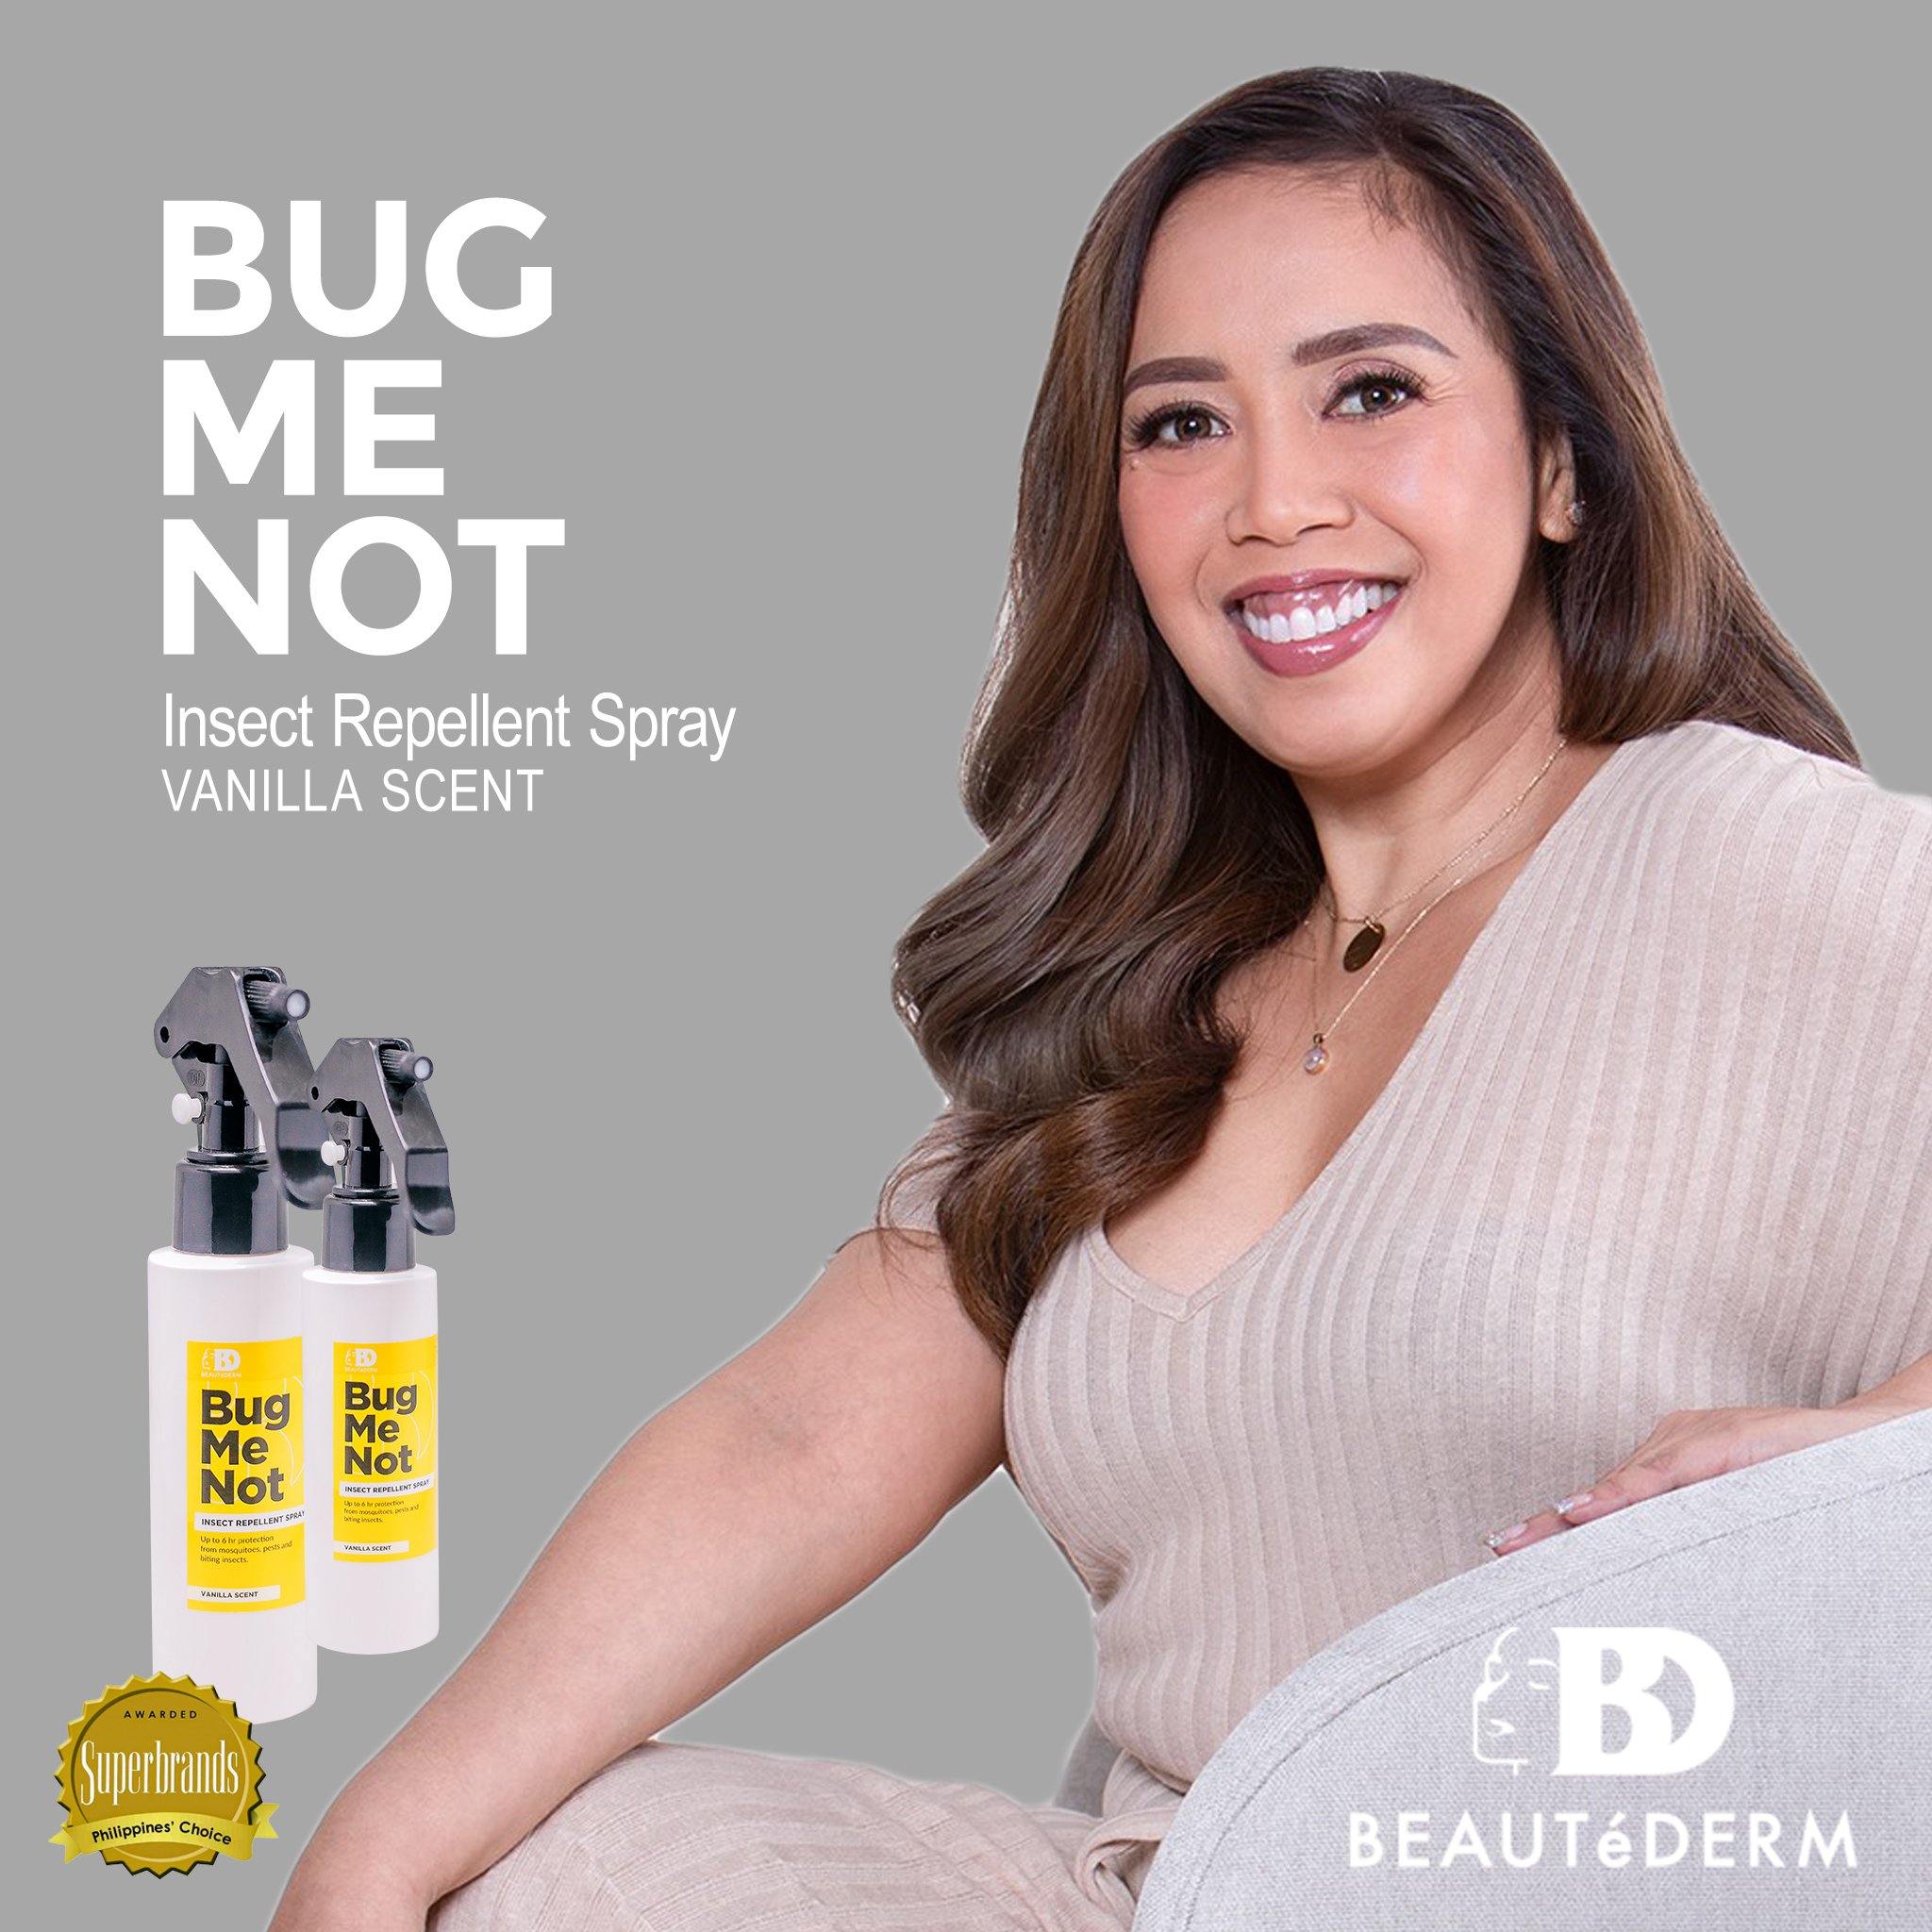 Bug Me Not, Insect Repellent Spray, Vanilla Scent, by Beautederm, with Kakai Bautista (Beautederm Ambassador)